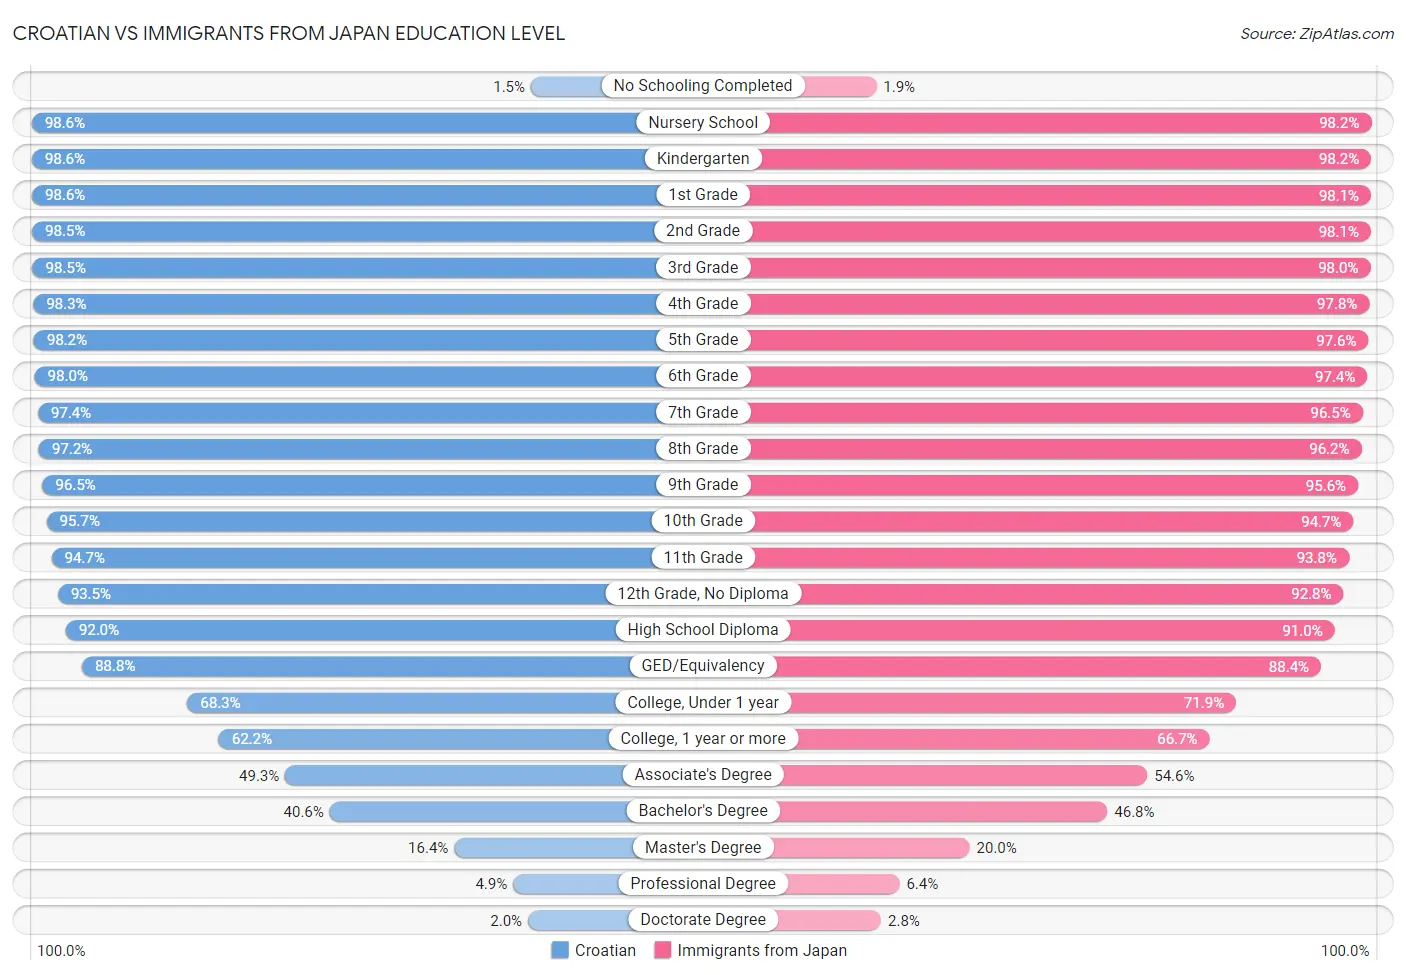 Croatian vs Immigrants from Japan Education Level